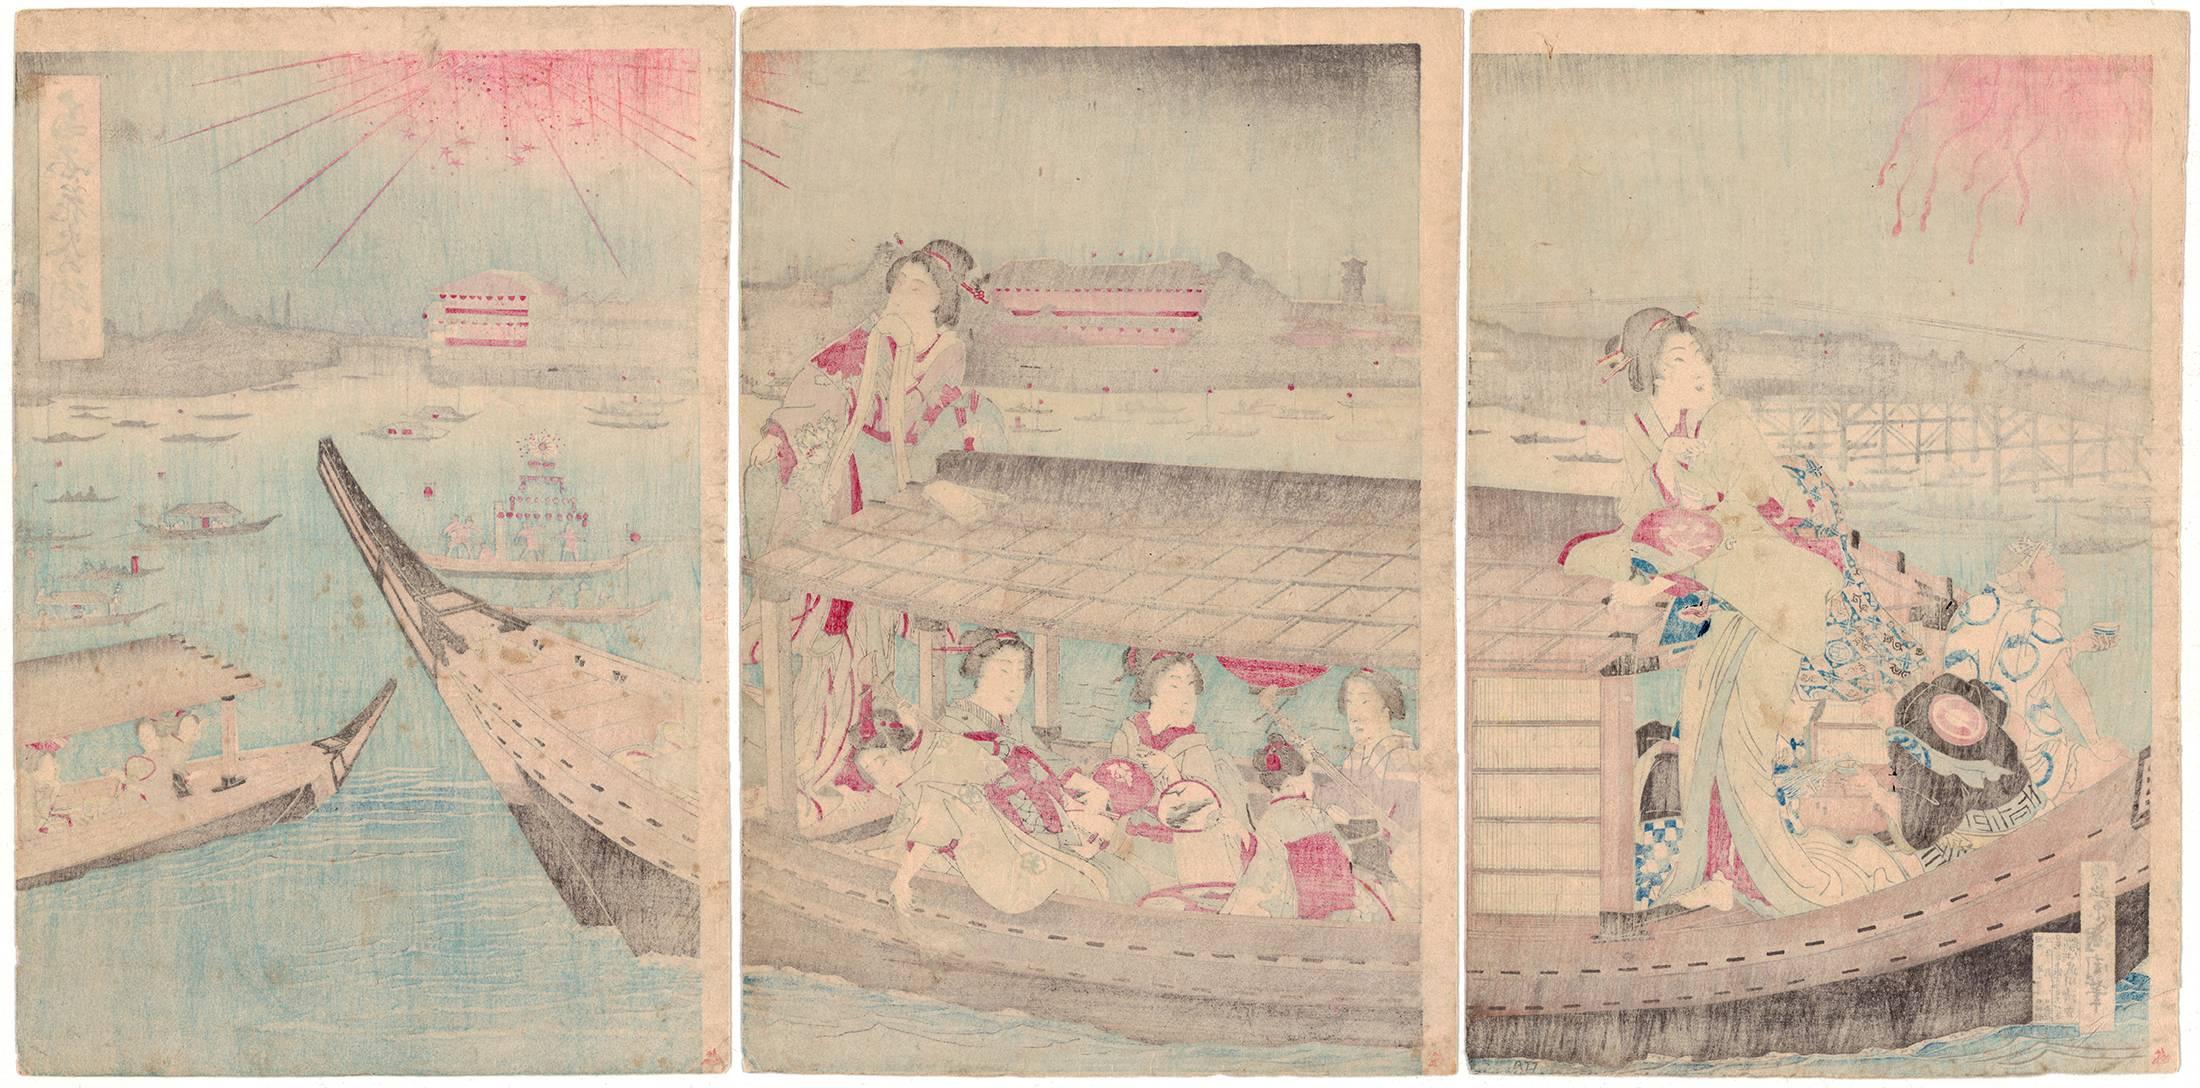 Artist: Kunichika Toyohara (1835-1900)
Title: Fireworks from Summer Pleasure Boat in Ryogoku
Publisher: Takekawa Seikichi
Published: Late 19th century
Size (unmounted): (R) 25.0 x 37.3 (C) 25.2 x 37.3 (L) 25.1 x 37.2 cm

Kunichika Toyohara